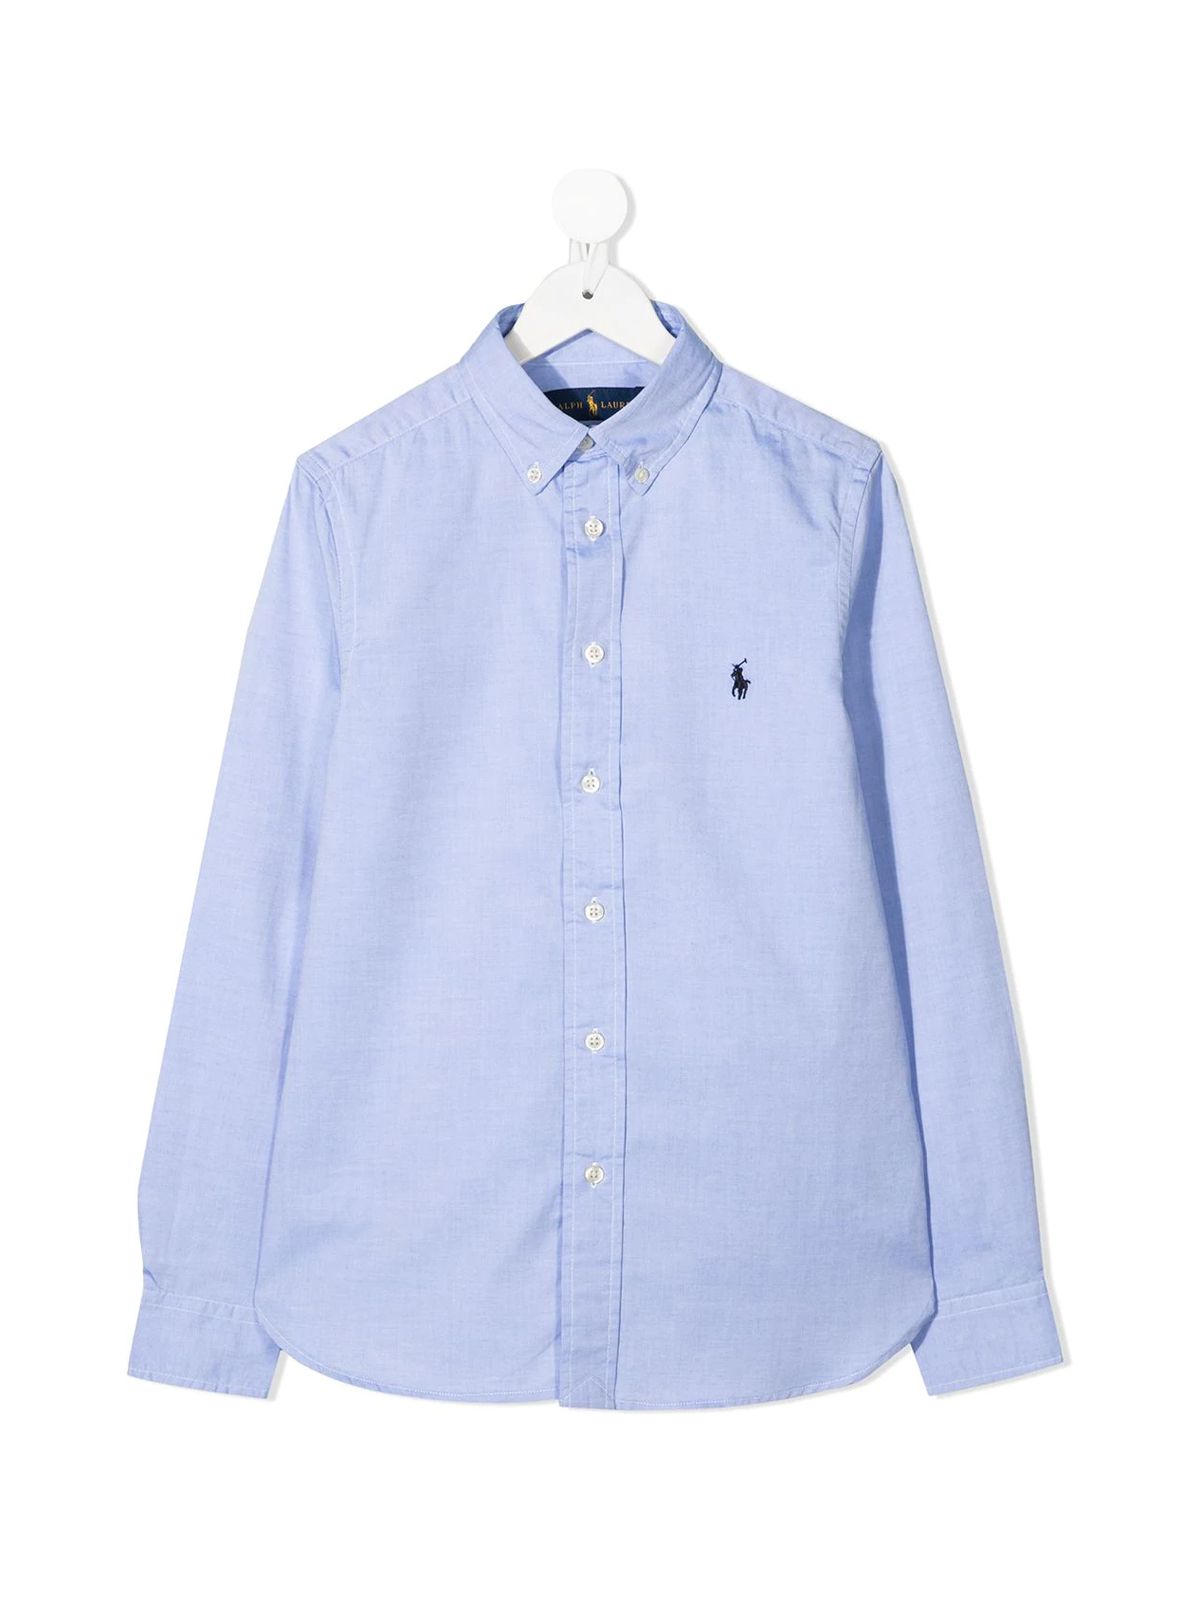 Polo Ralph Lauren Kids Oxford Shirt In Light Blue Slim-fit Cotton